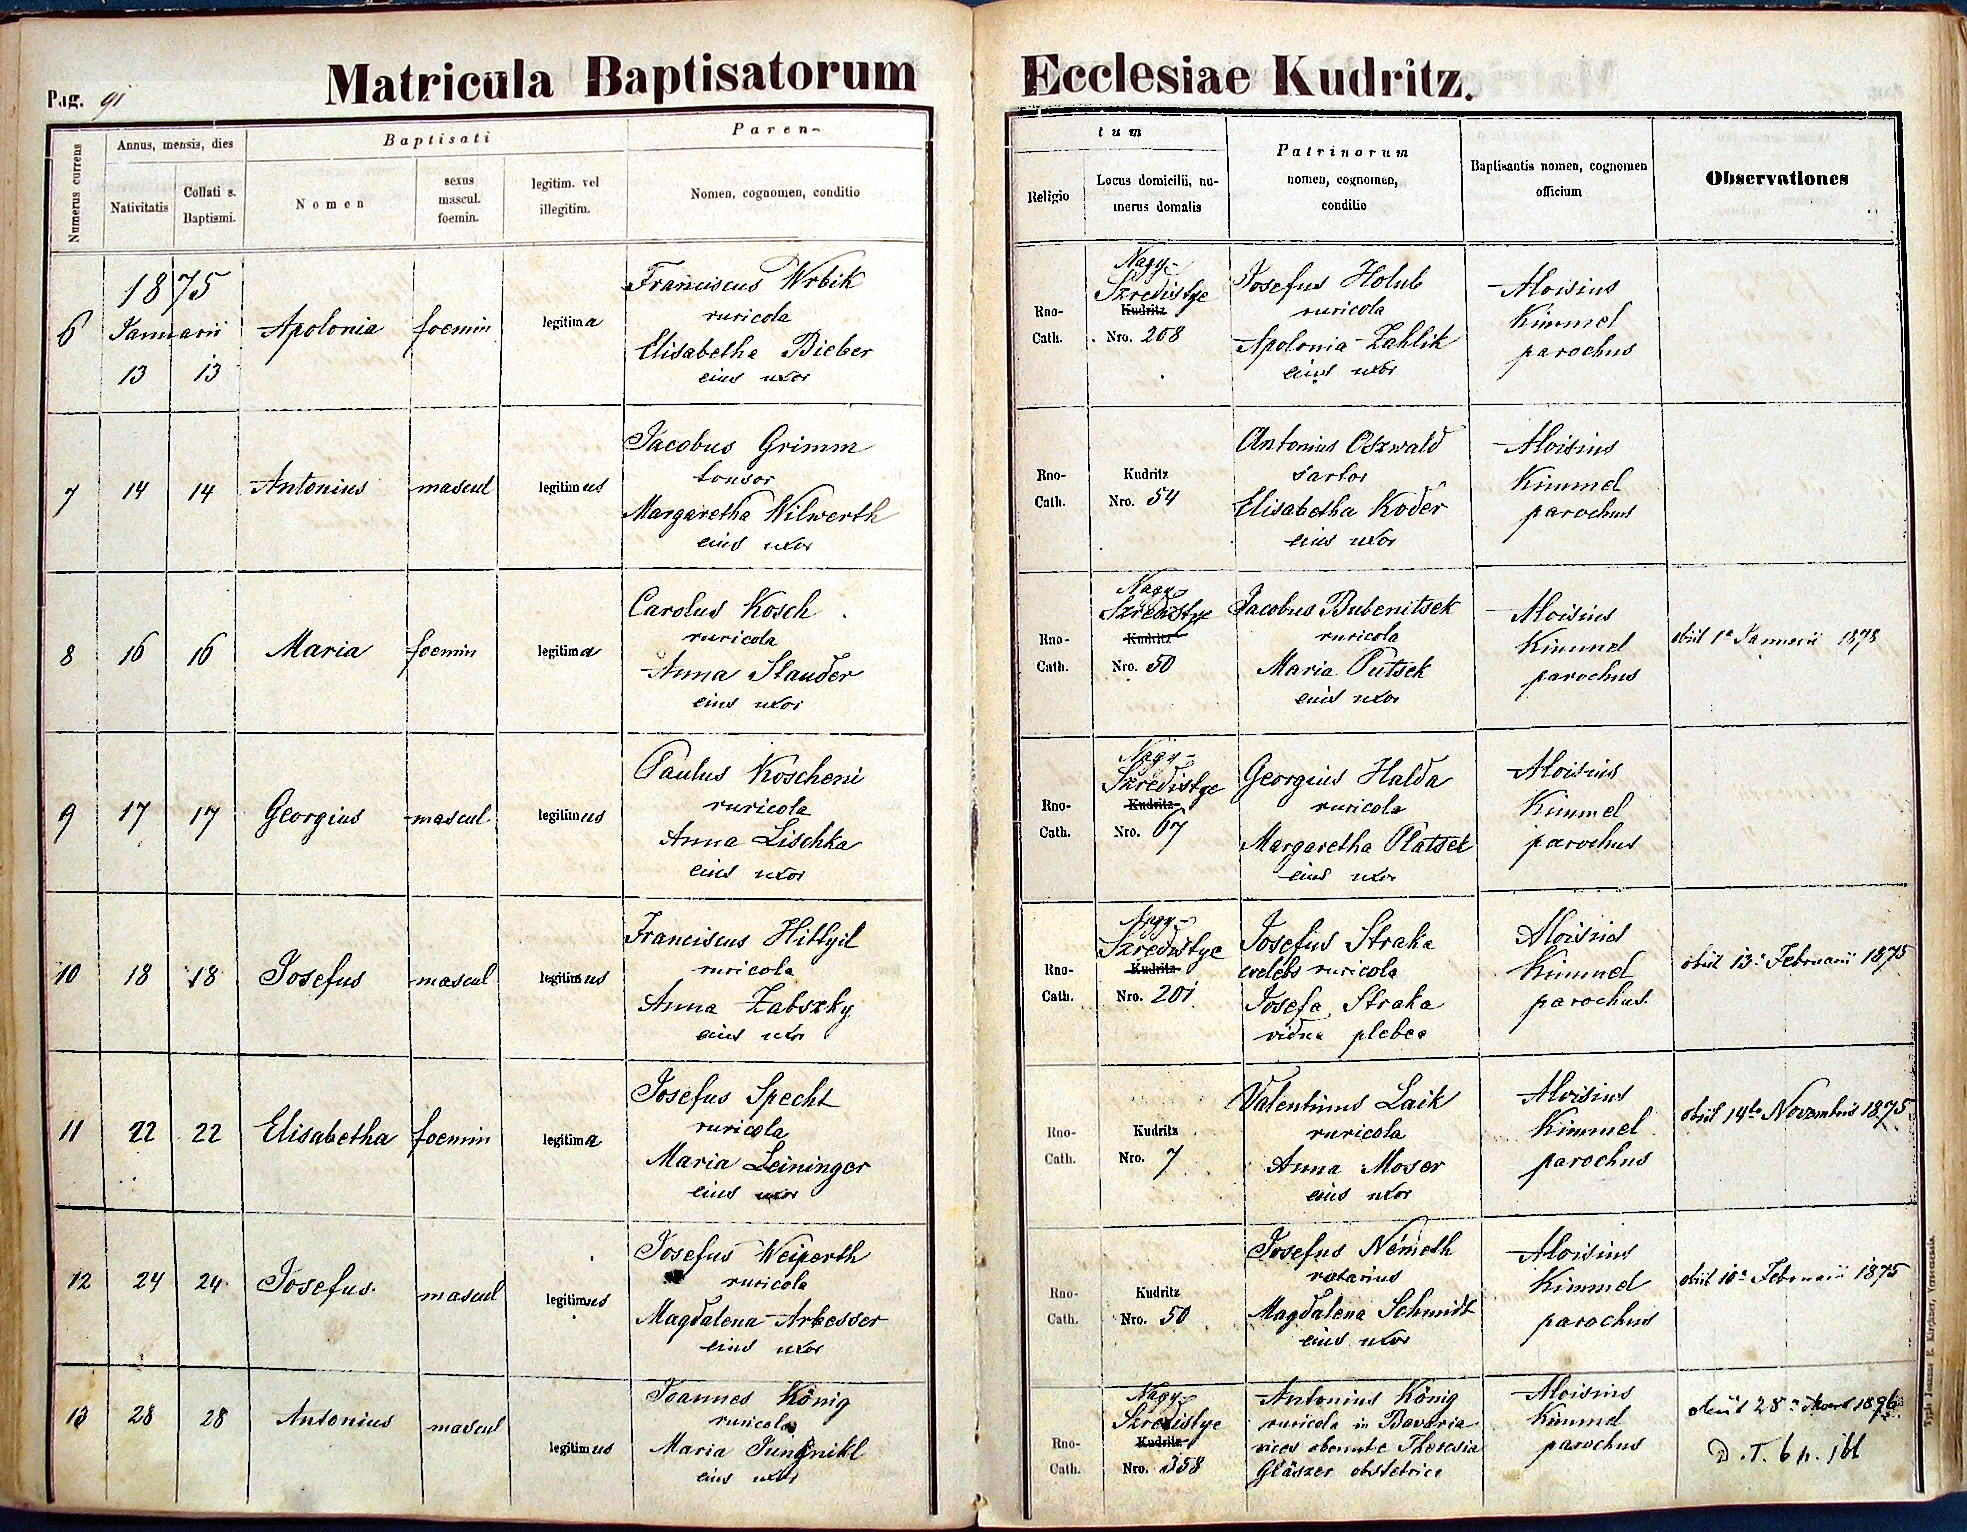 images/church_records/BIRTHS/1884-1899B/1889/091